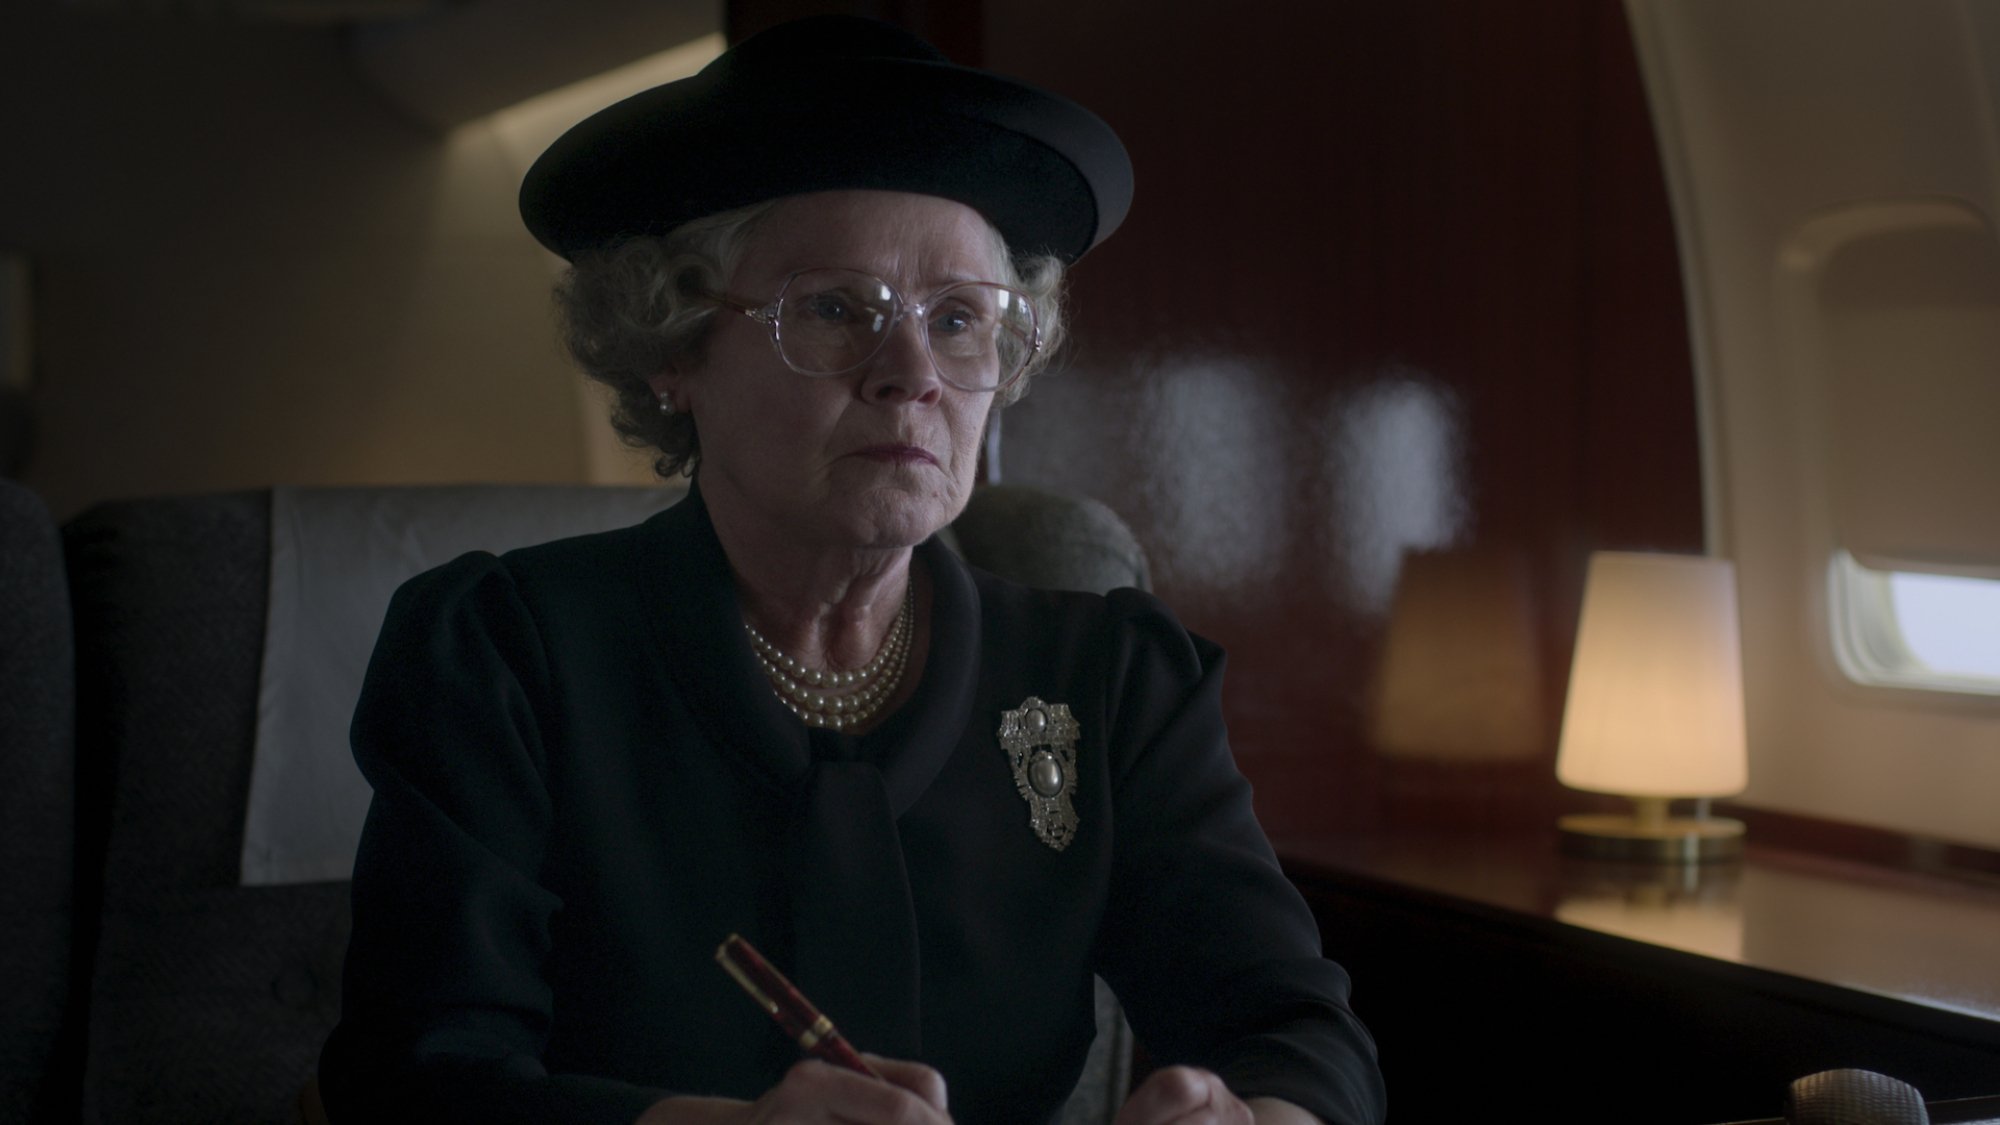 Imelda Staunton as Queen Elizabeth II sitting in a plane in black.